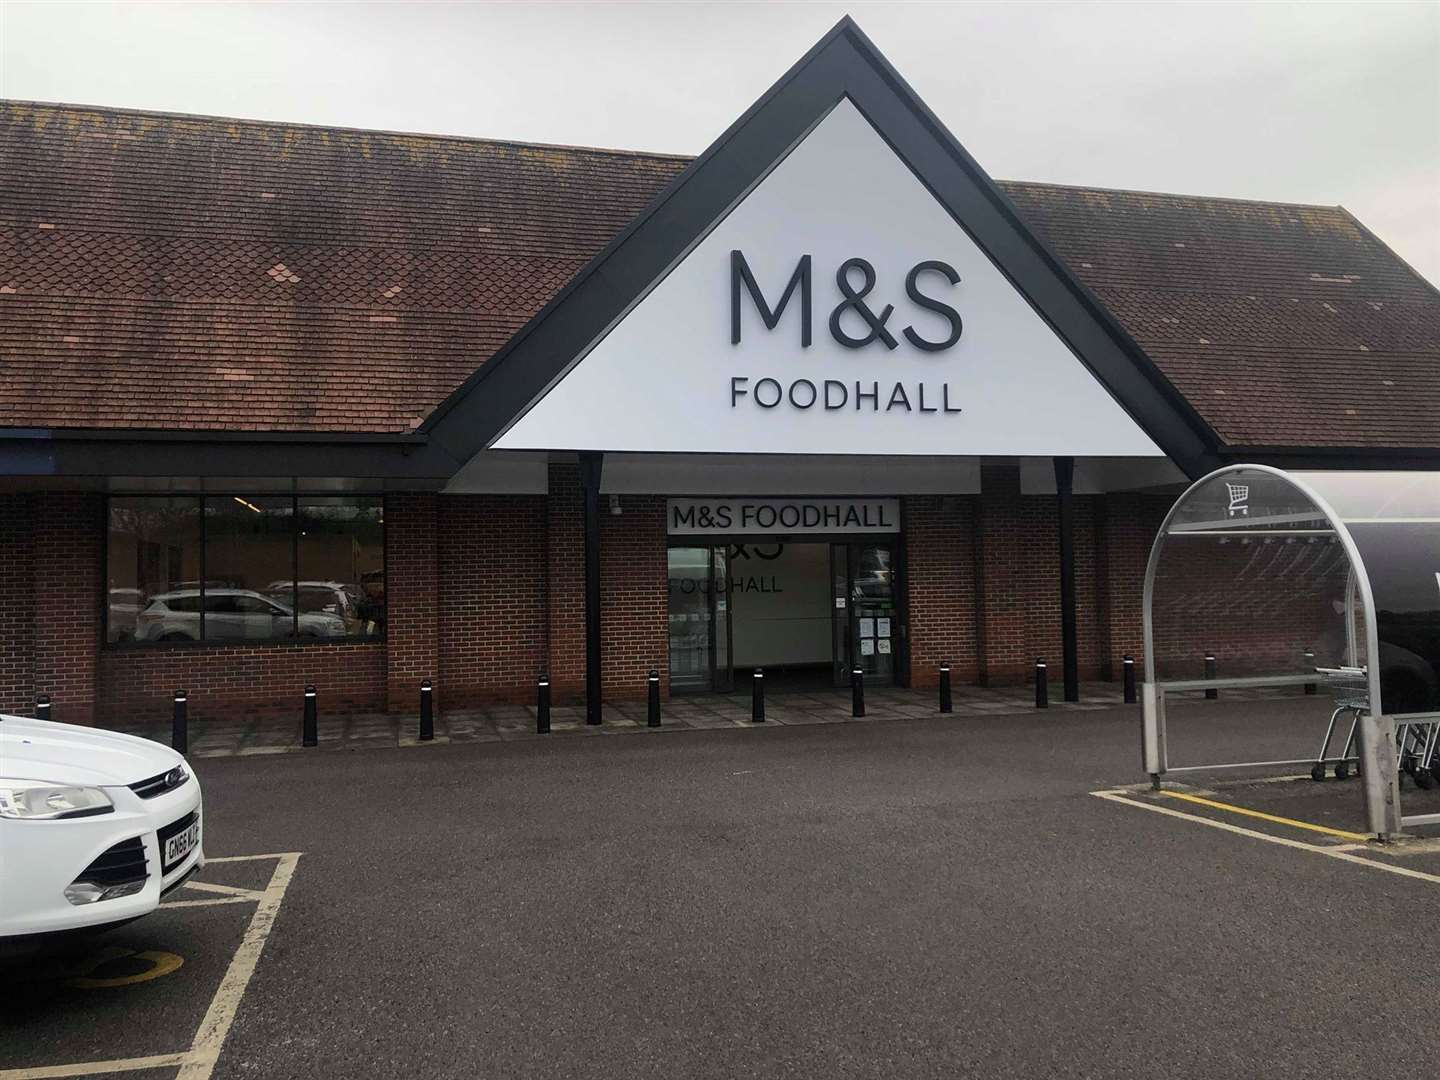 The M&S Foodhall in Ashford